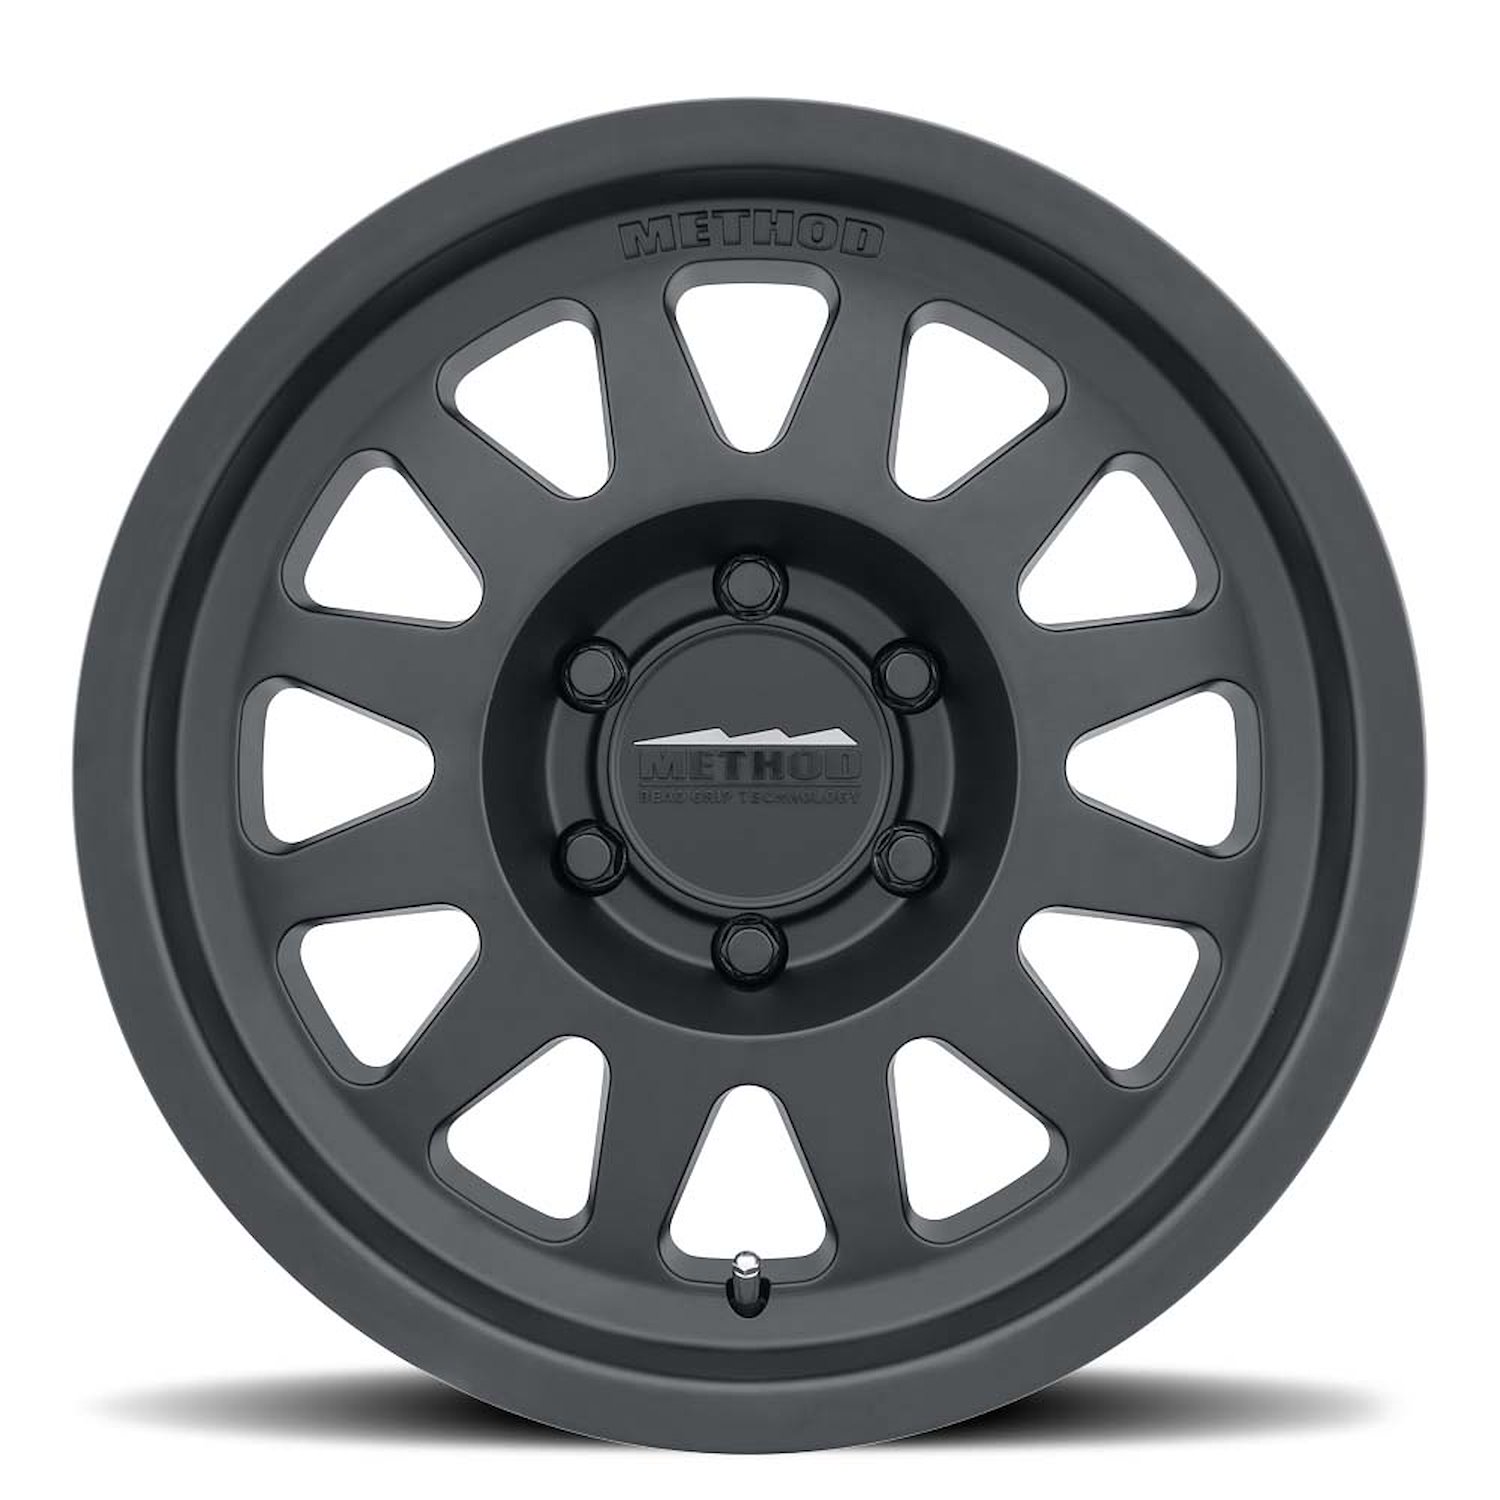 MR70478516500 TRAIL MR704 Bead Grip Wheel [Size: 17" x 8.5"] Matte Black